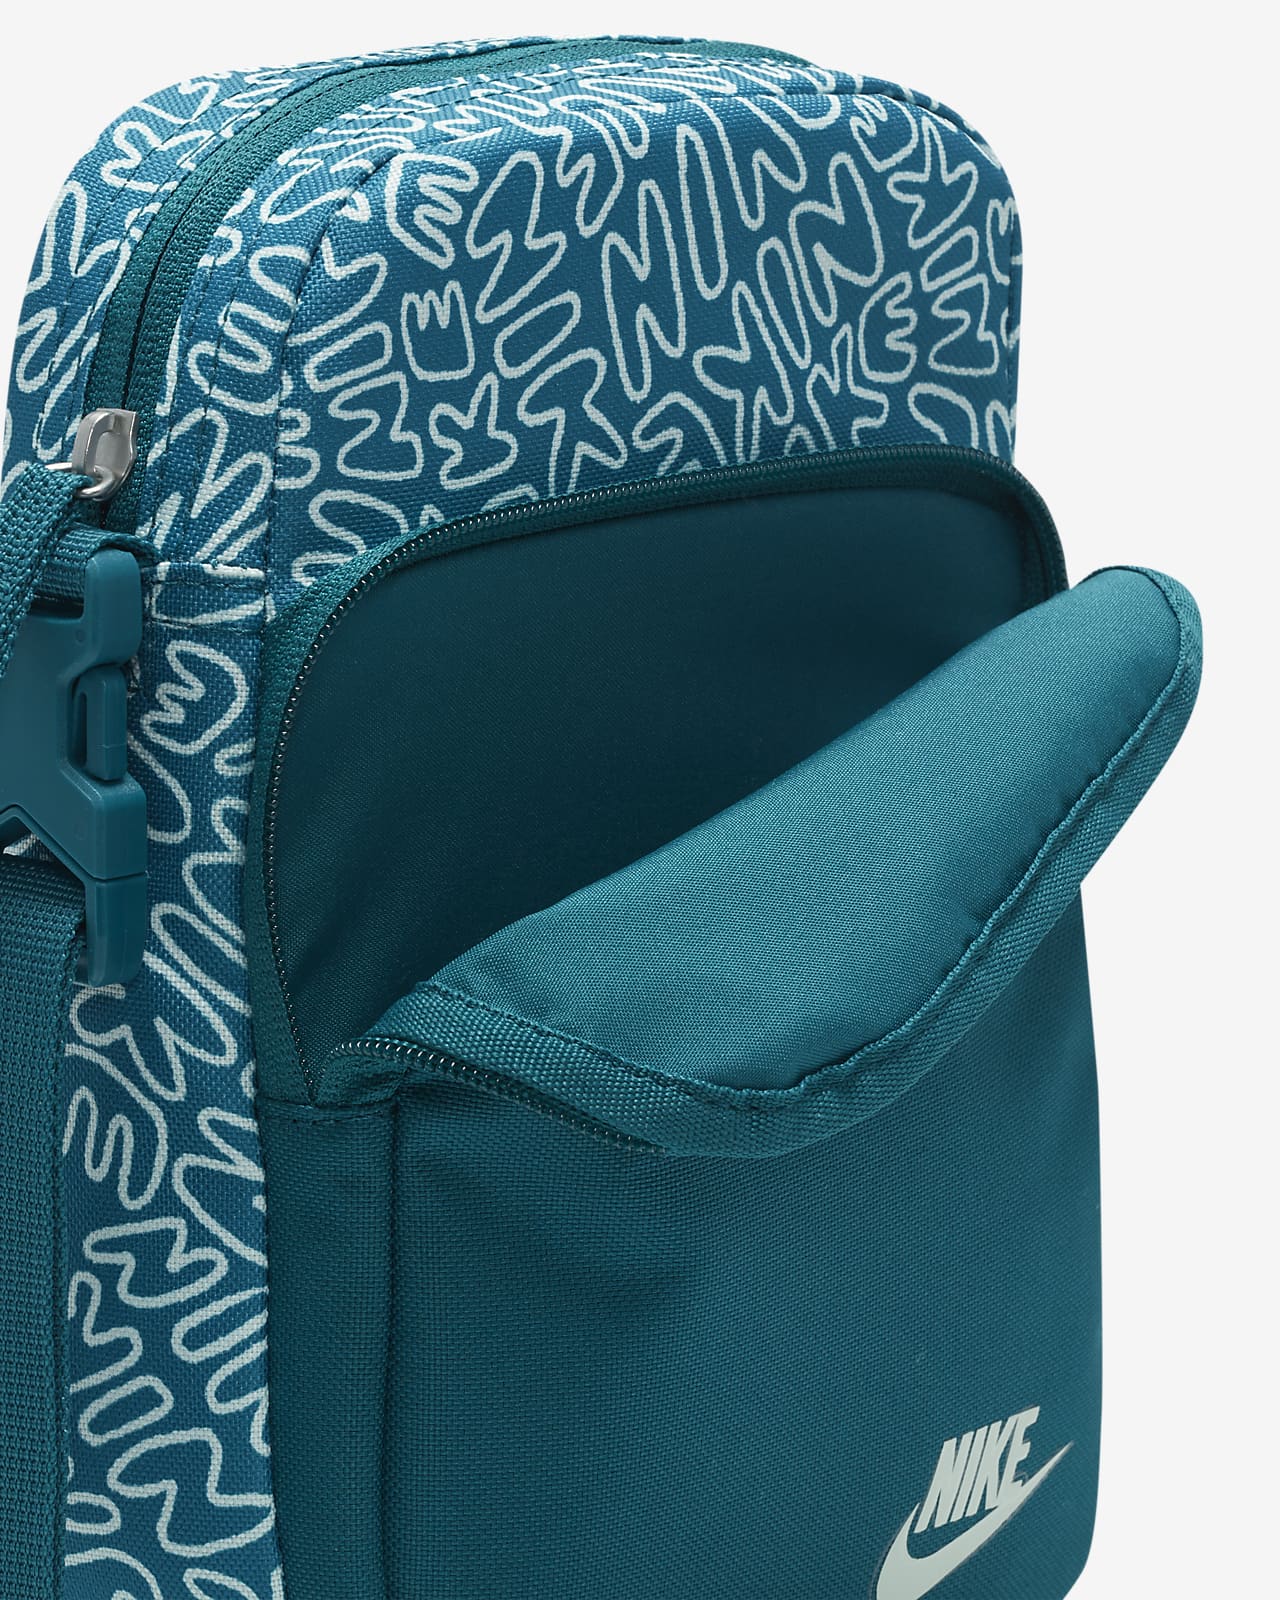 Nike Heritage cross body bag in blue